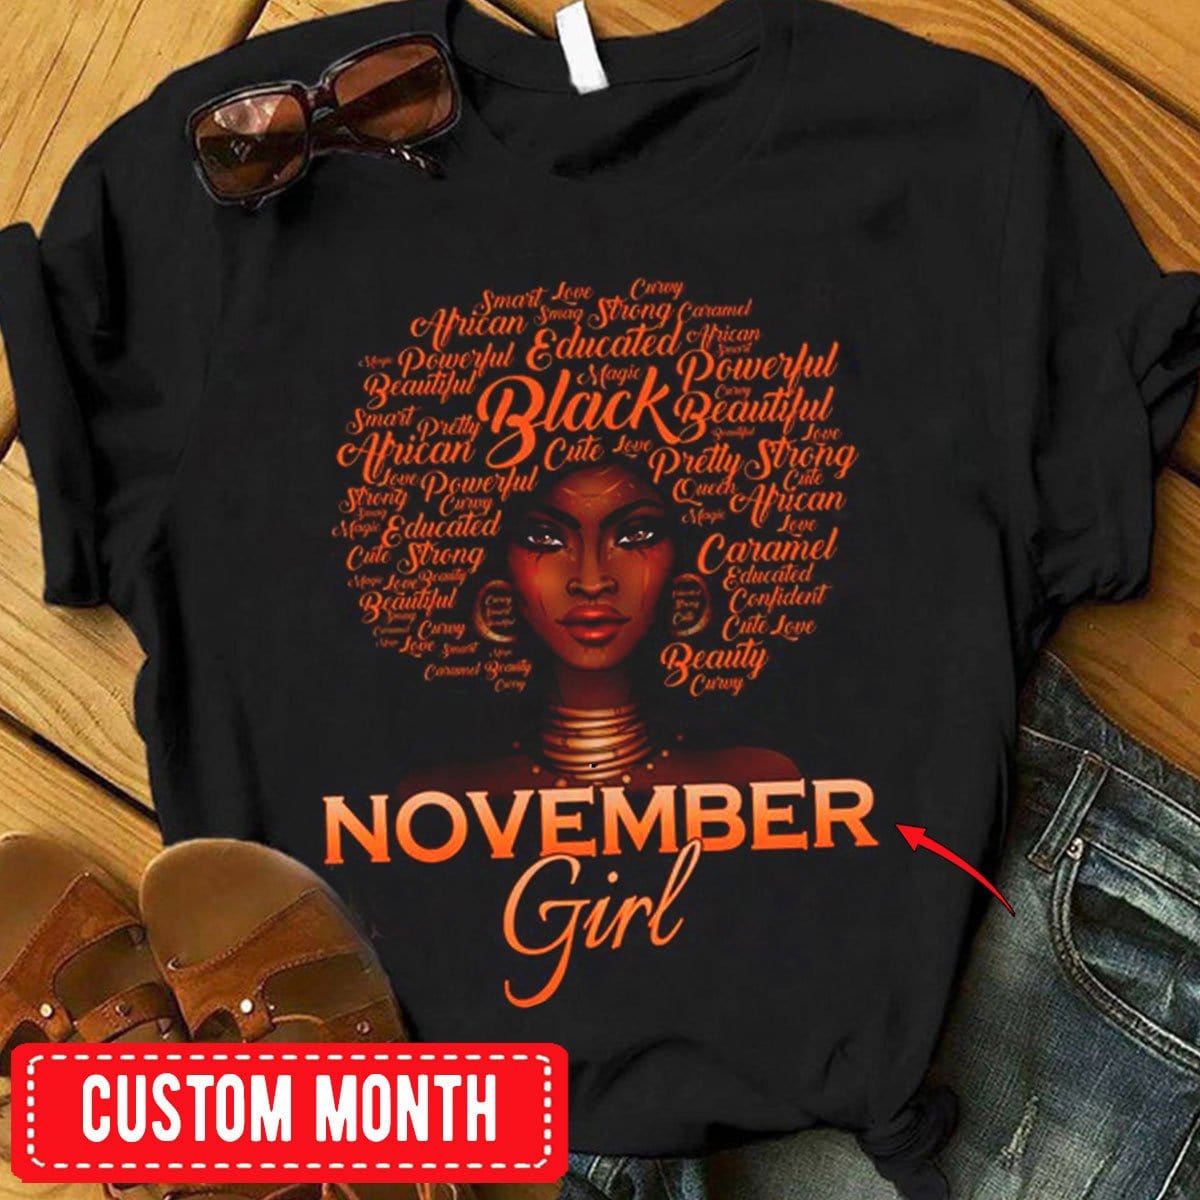 November Girl, Afro Black Woman Personalized Birthday Shirts